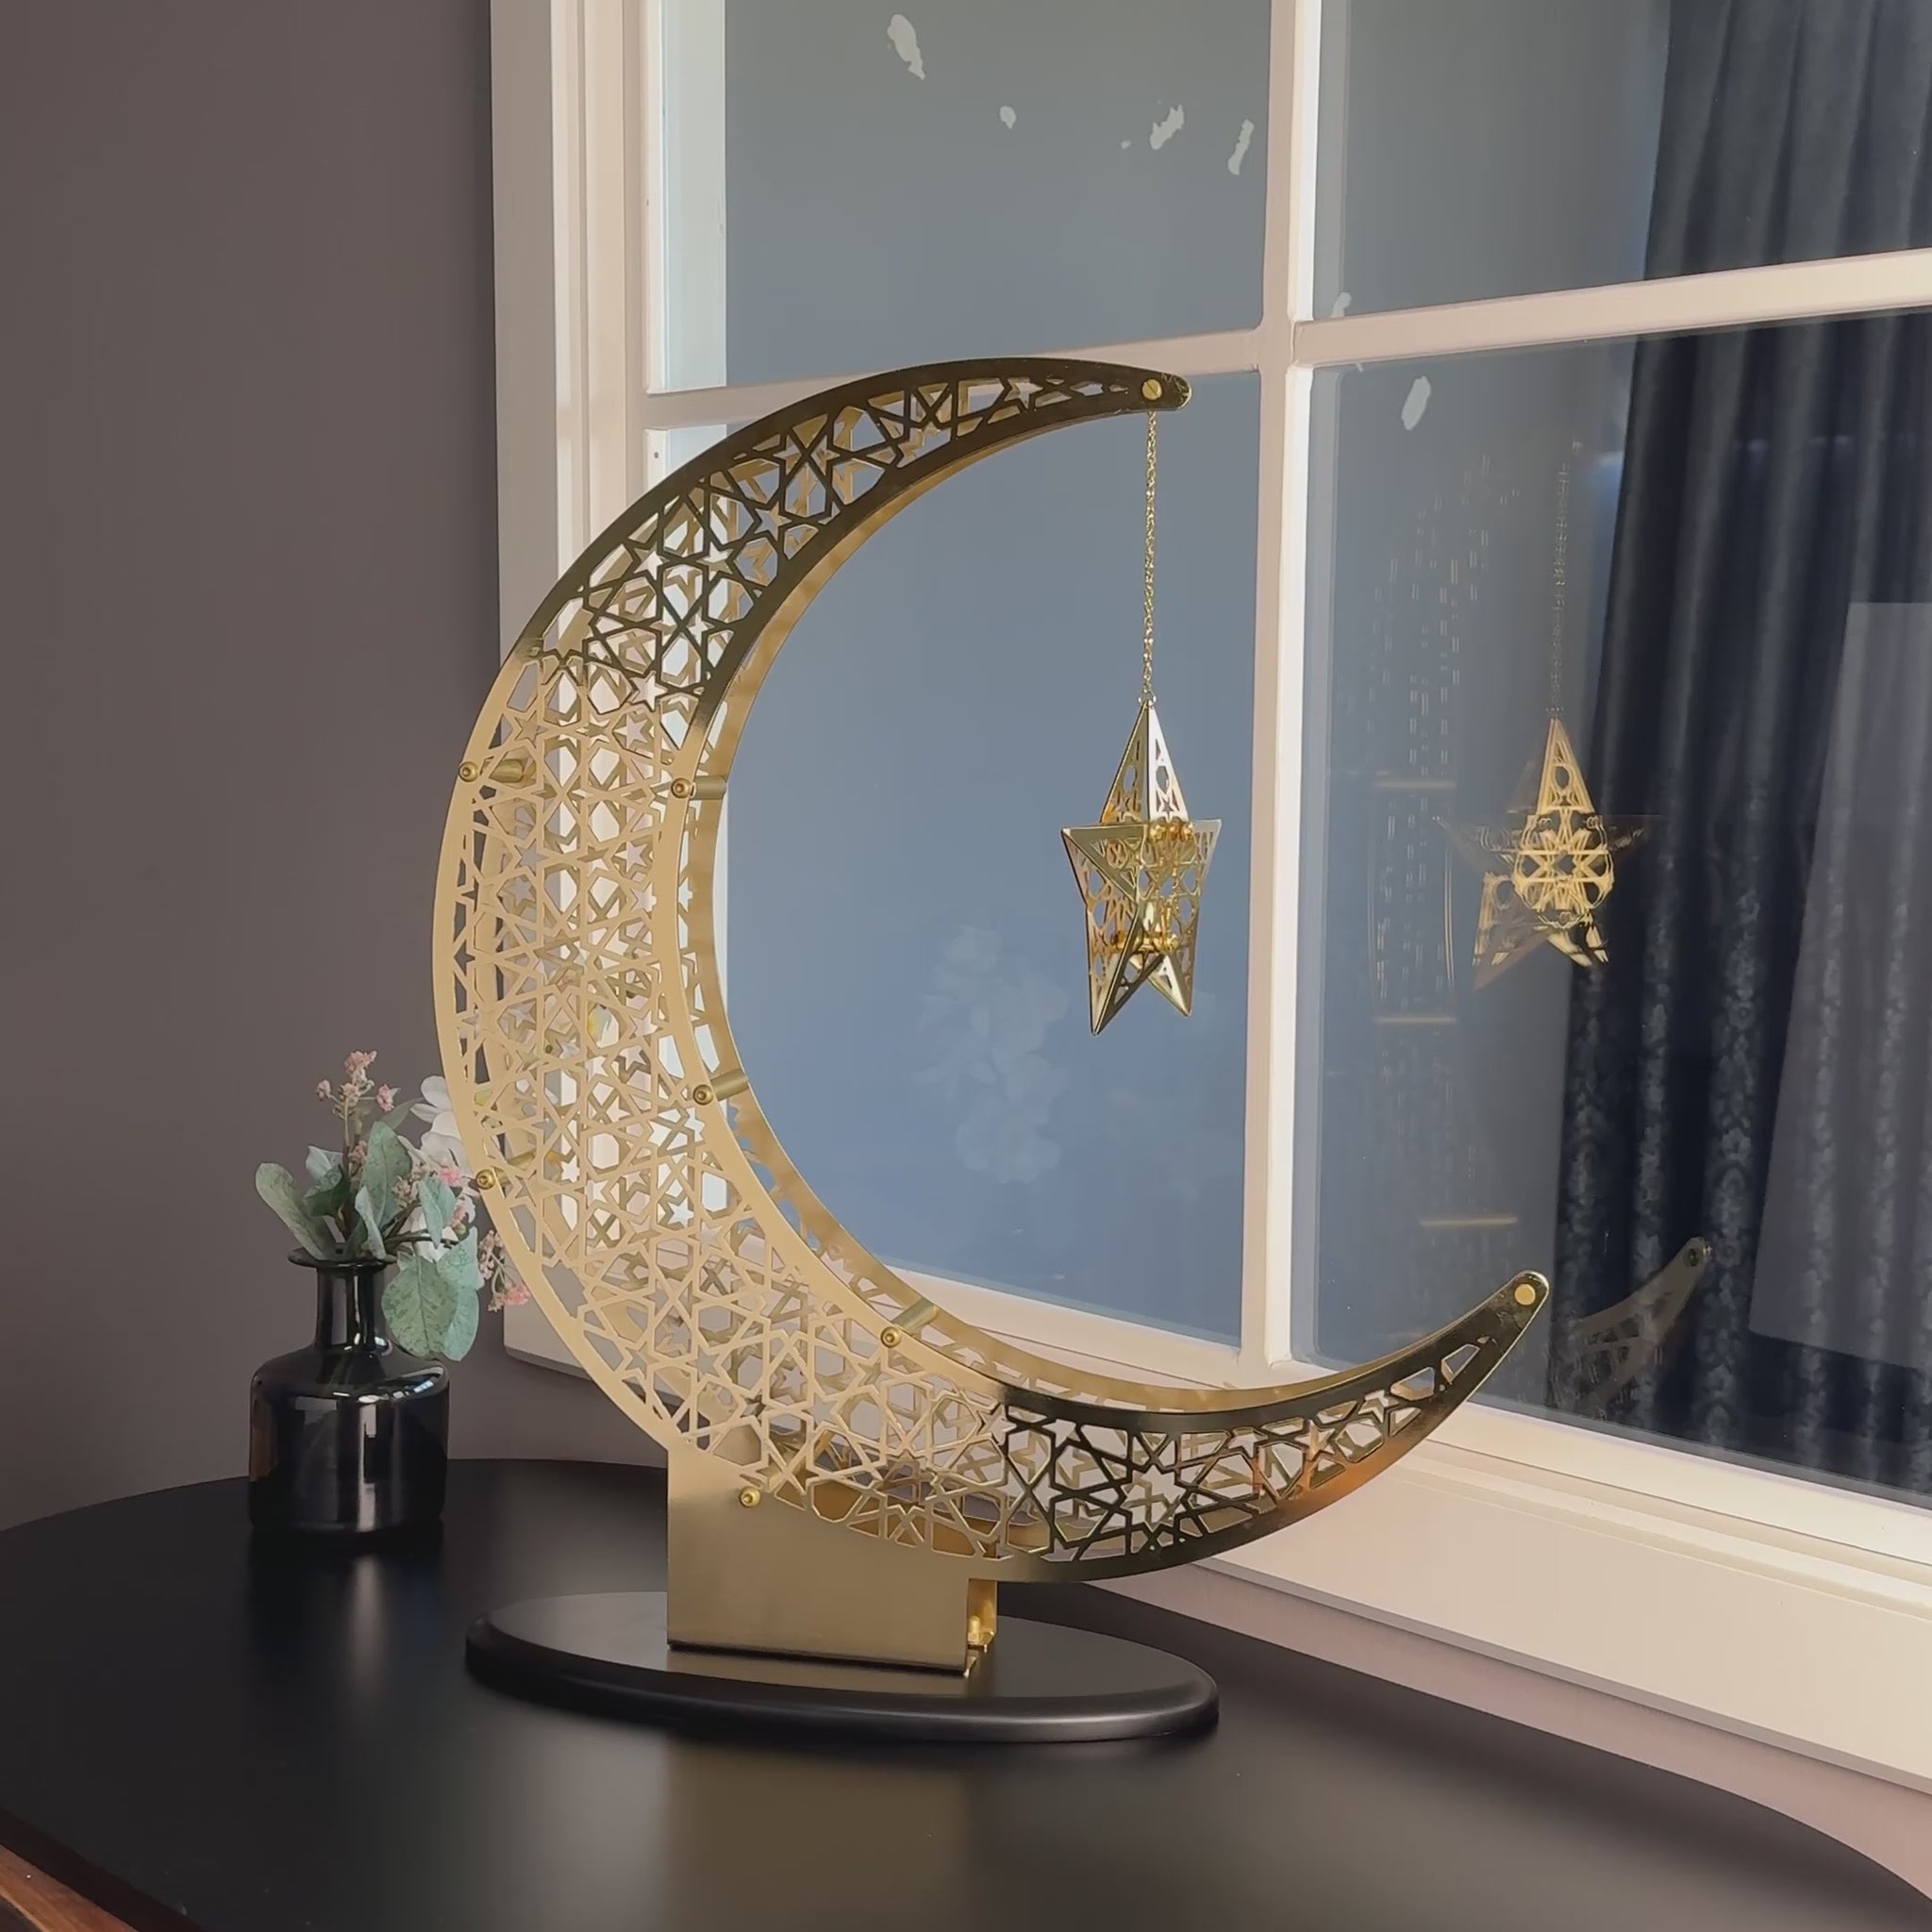 shiny-metal-crescent-star-ramadan-decoration-video-gold-islamic-gift-home-accent-shukranislamicarts